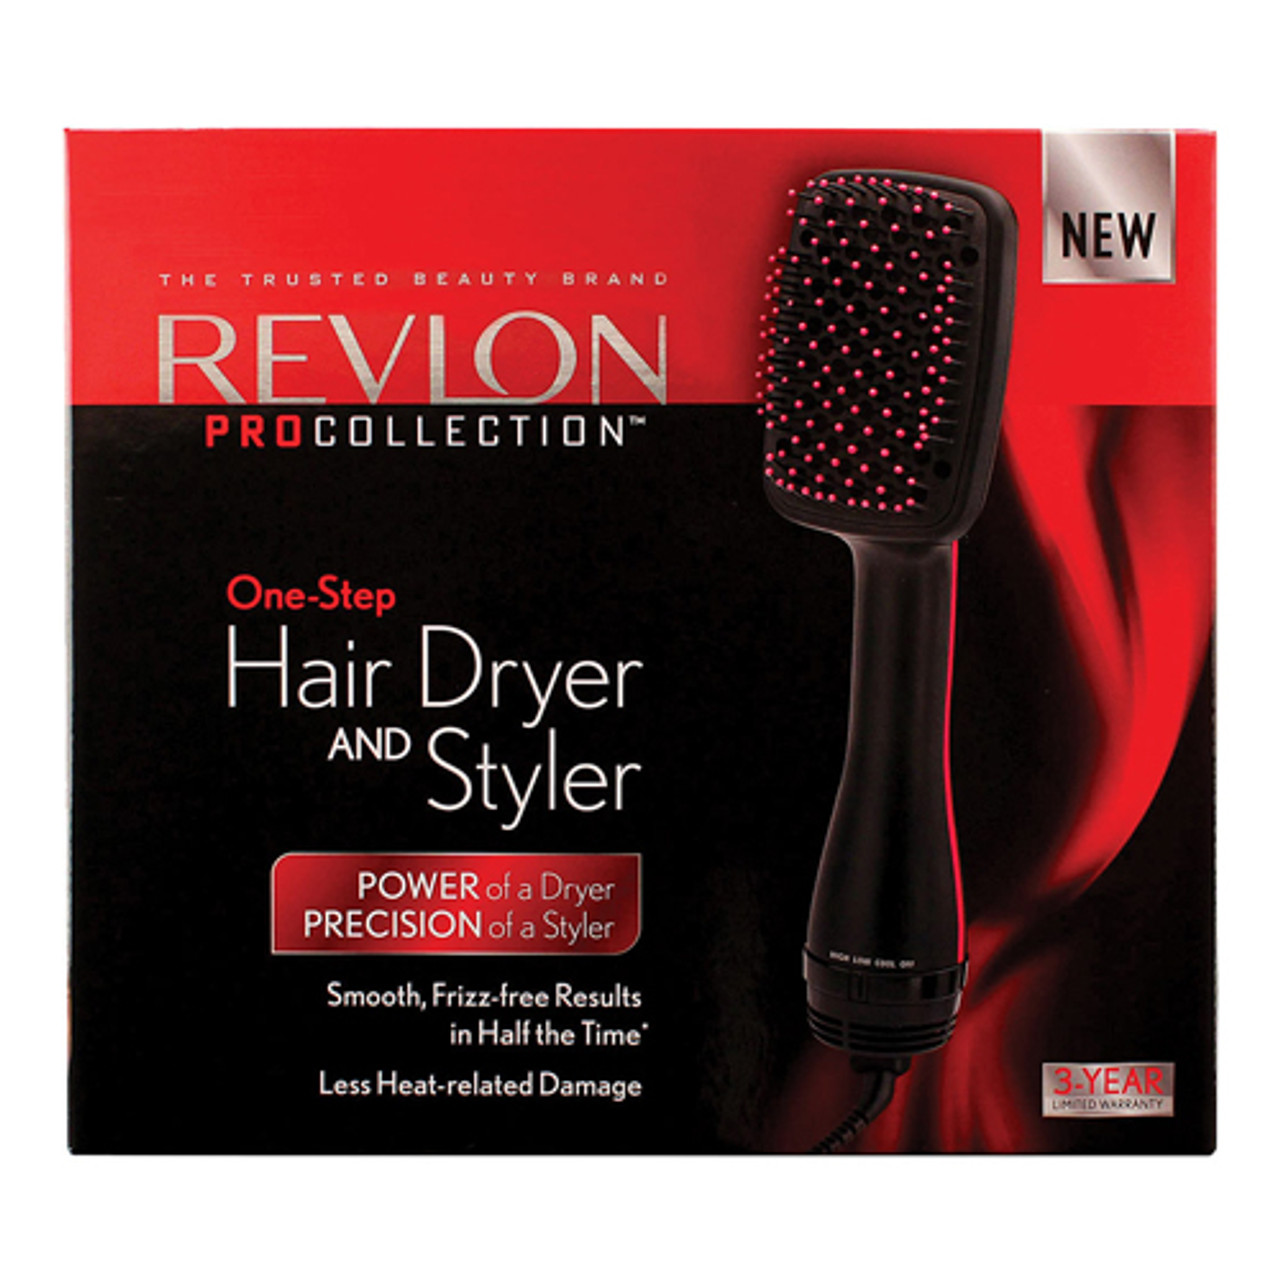 And 1 Revlon Dryer Styler, Pro One-Step RVDR5212, Hair Ea 1100 Watt Collection